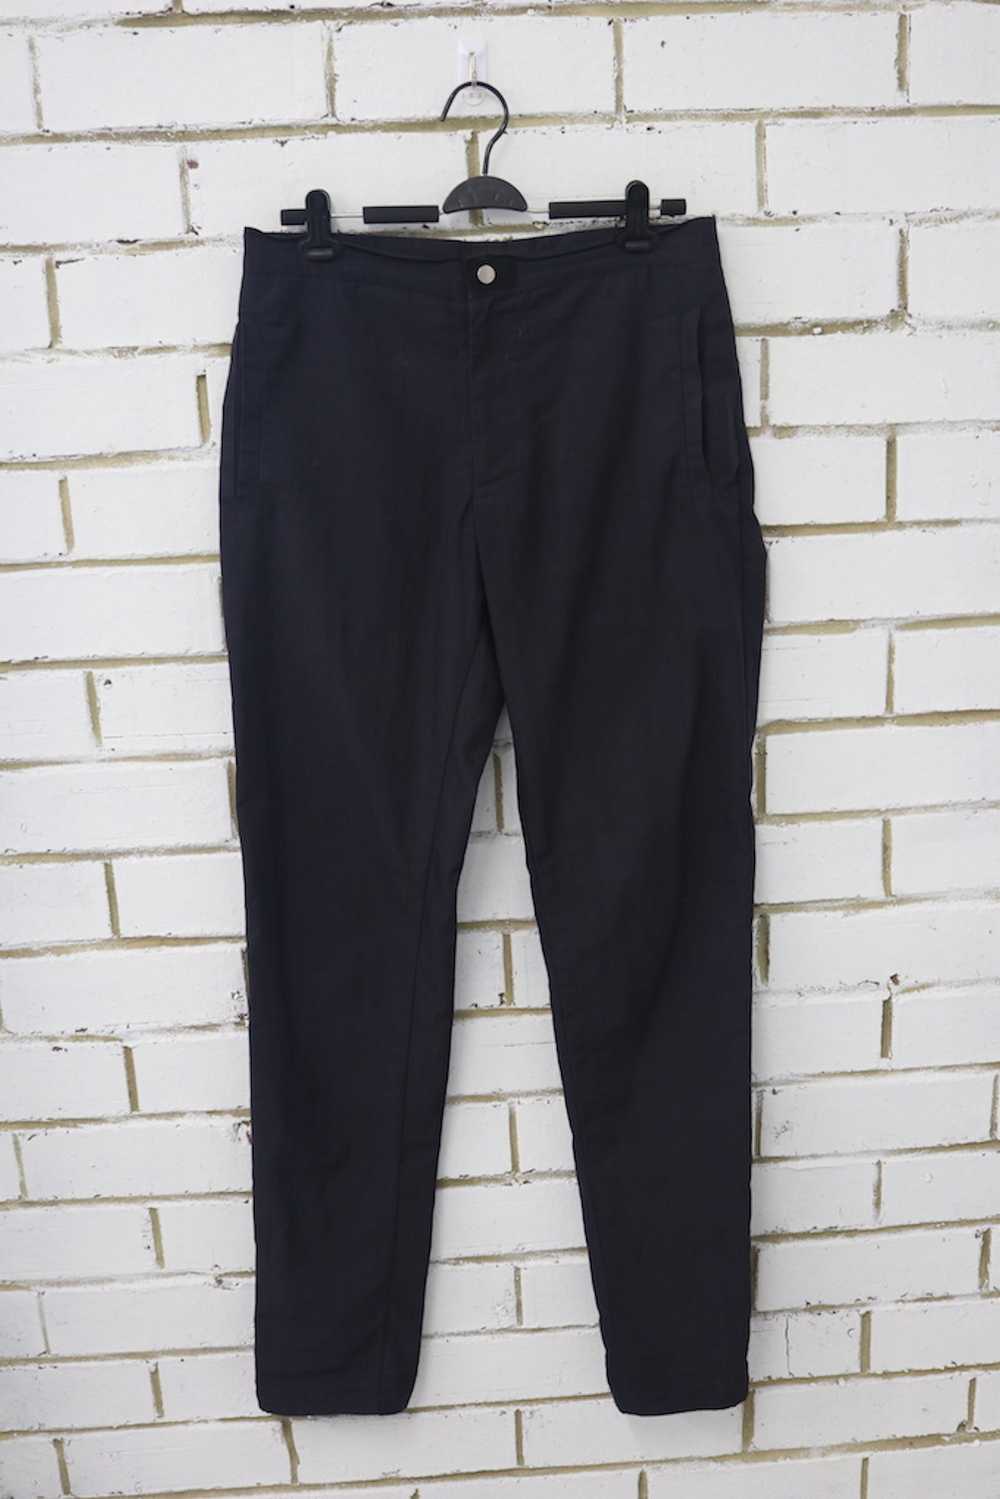 Lee Roach SS15 Navy Pants nylon/cotton - image 1